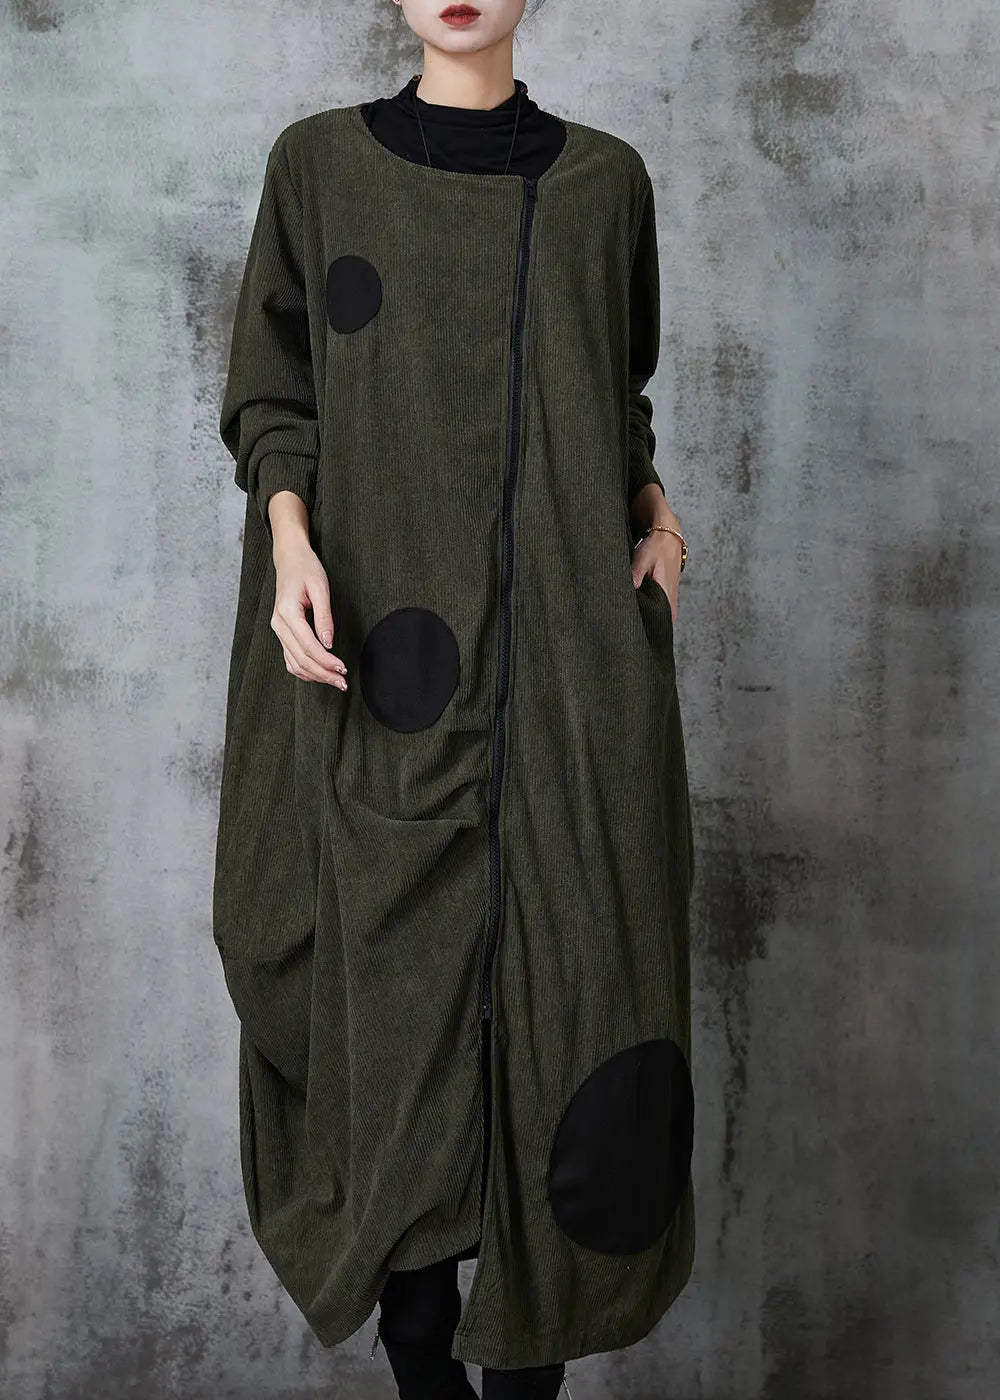 Blackish Green Dot Cotton Trench Coat Asymmetrical Spring Ada Fashion